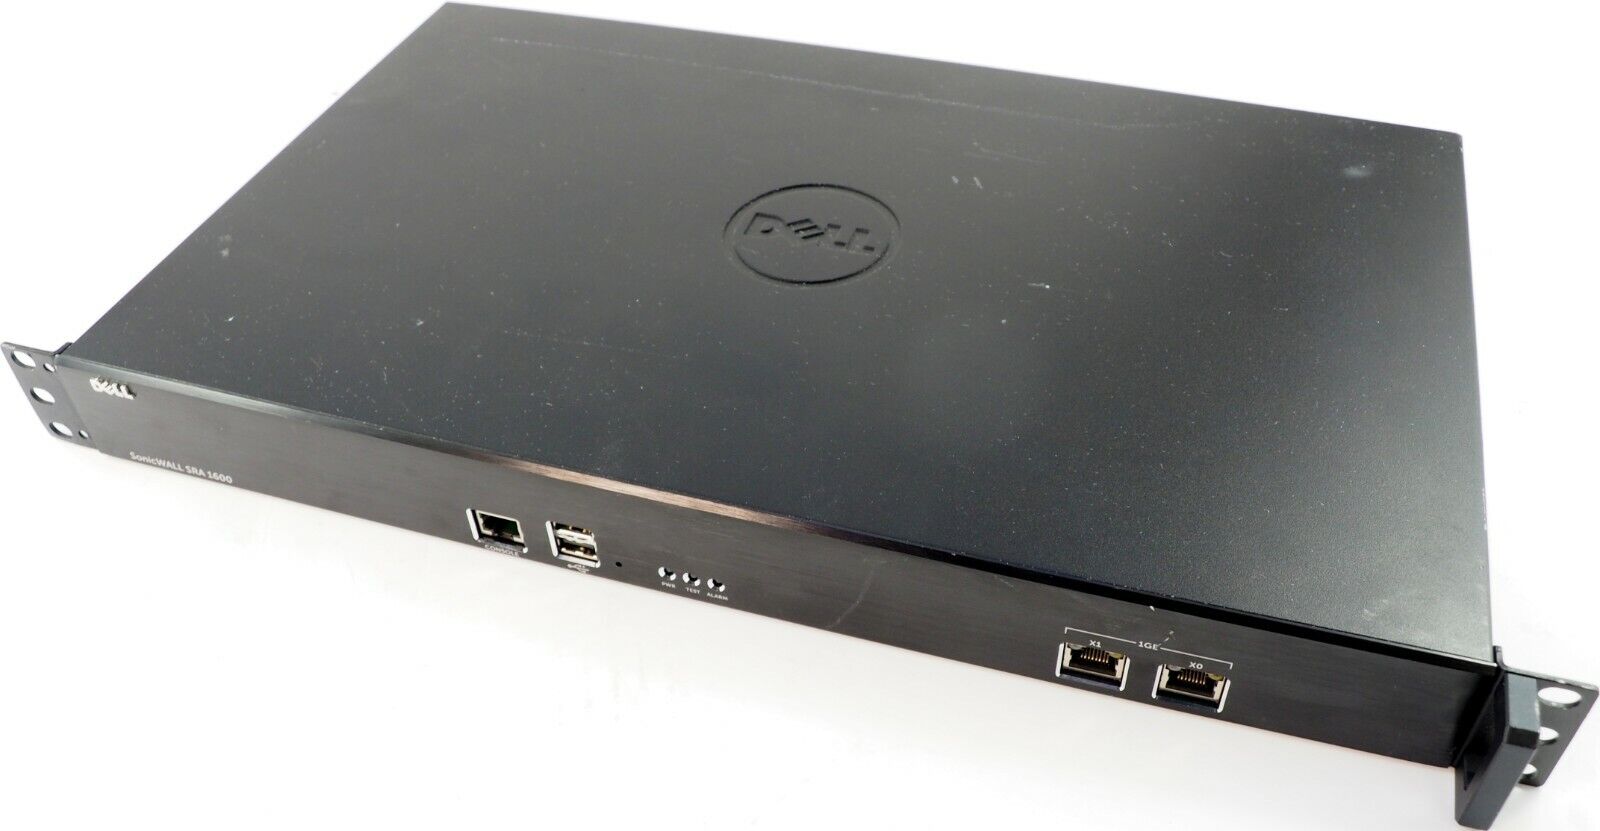 Dell SonicWALL SRA 1600 IRK23-0A0  Remote Access Server Appliance